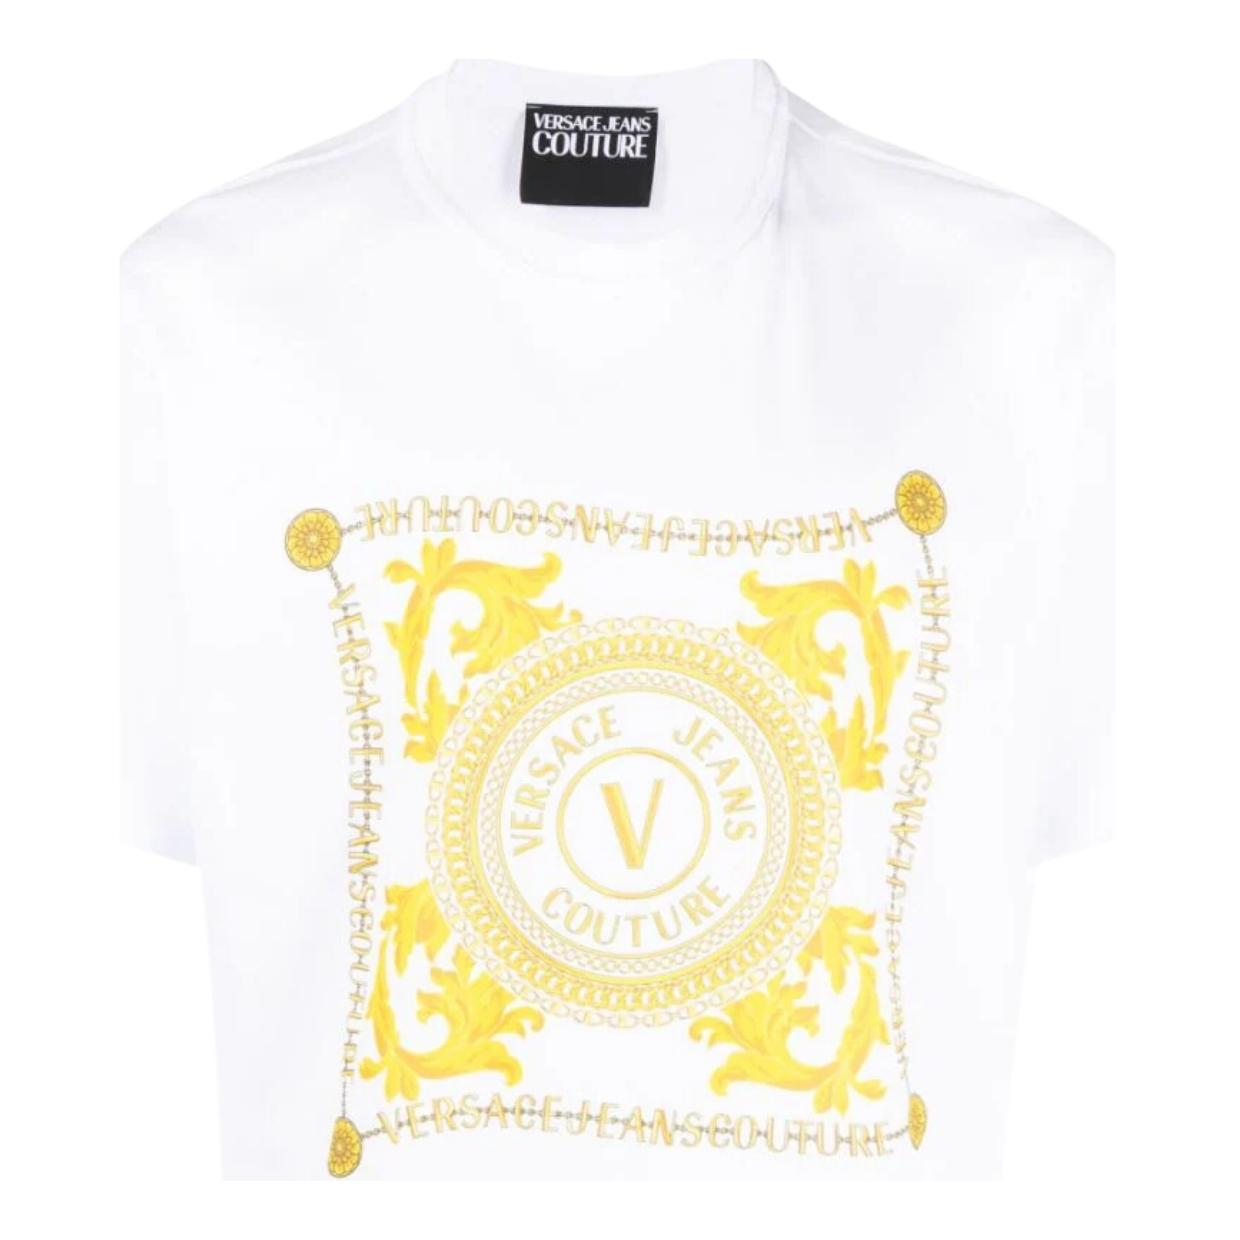 Versace Jeans Couture Chain-Link Emblem Logo White T-Shirt